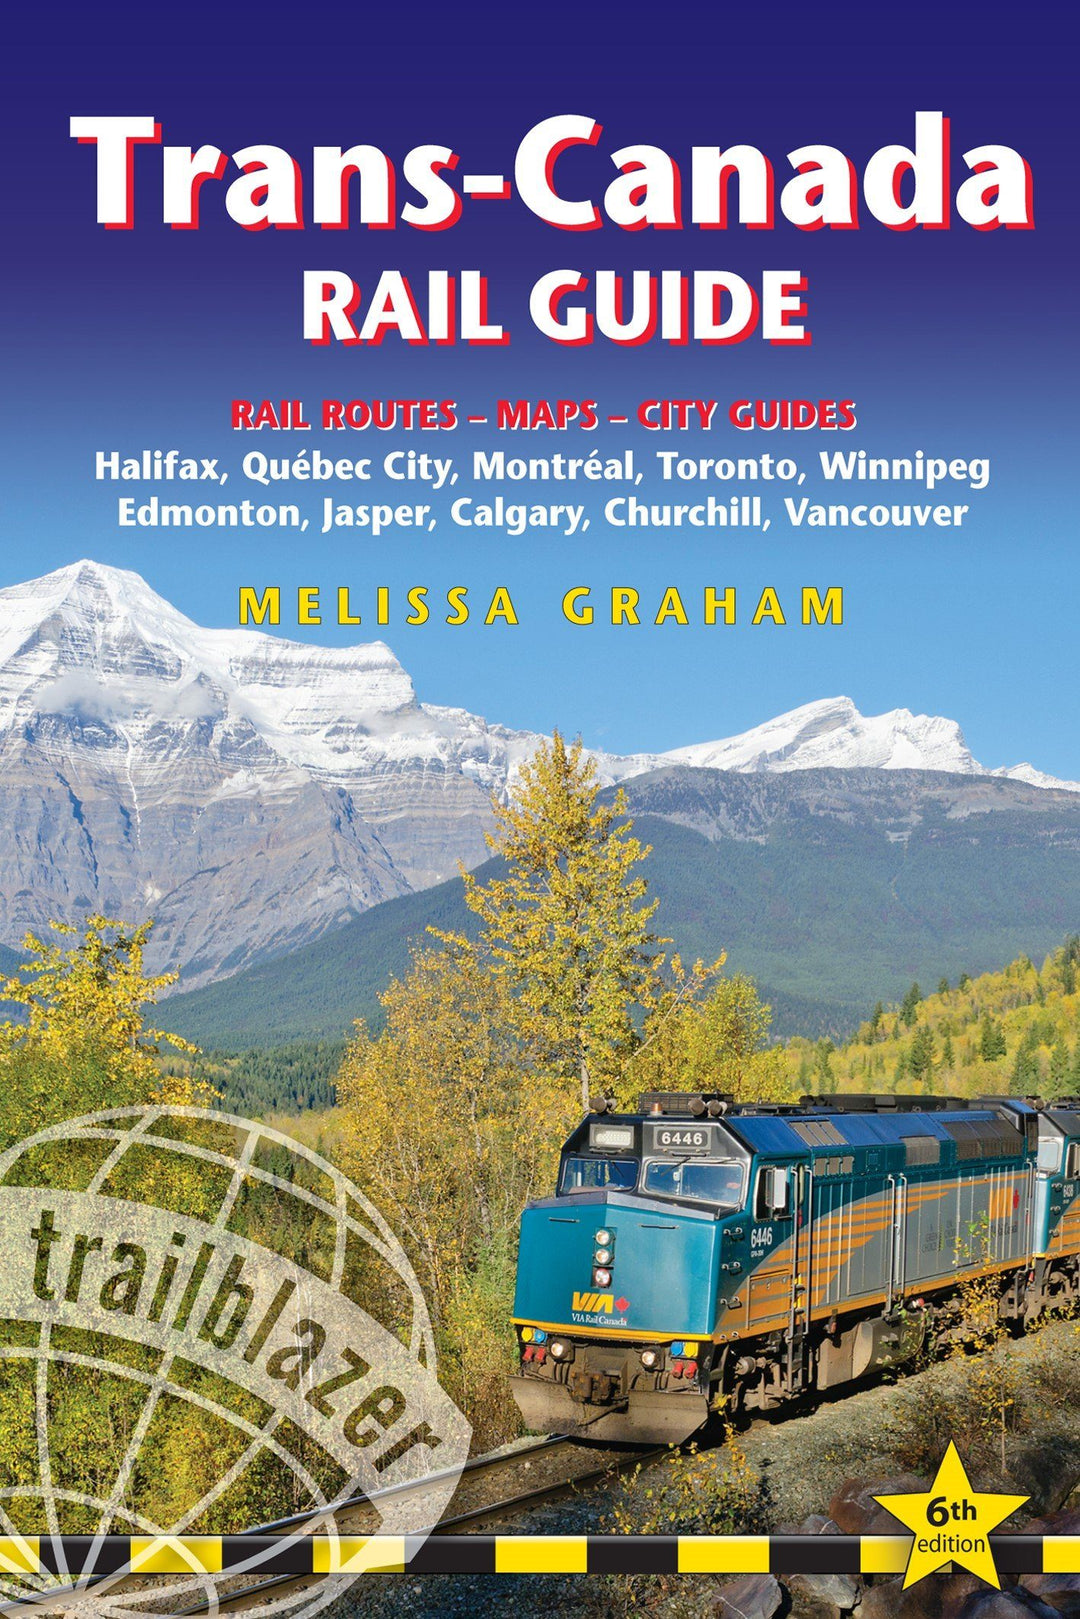 Guide de voyage (en anglais) - Trans-Canada rail guide | Trailblazer guide de voyage Trailblazer 